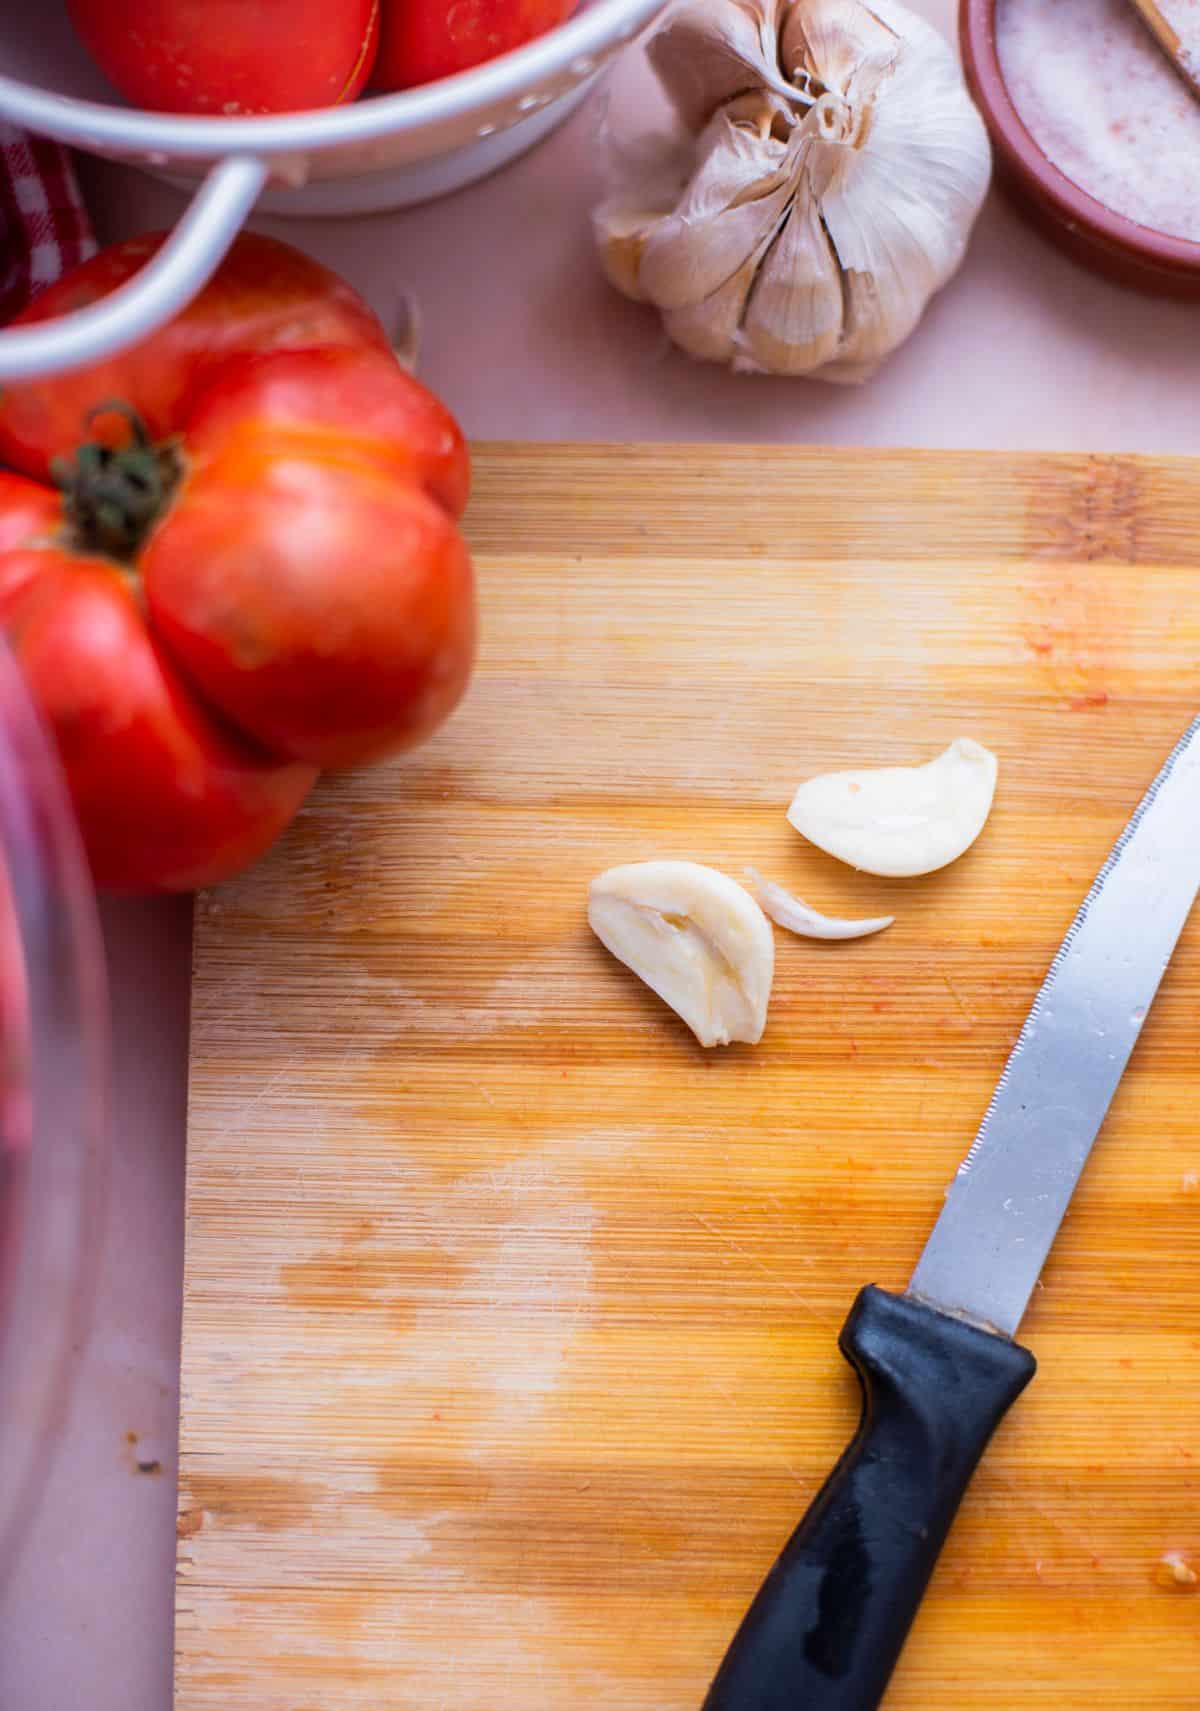 knife with garlic sliced in half